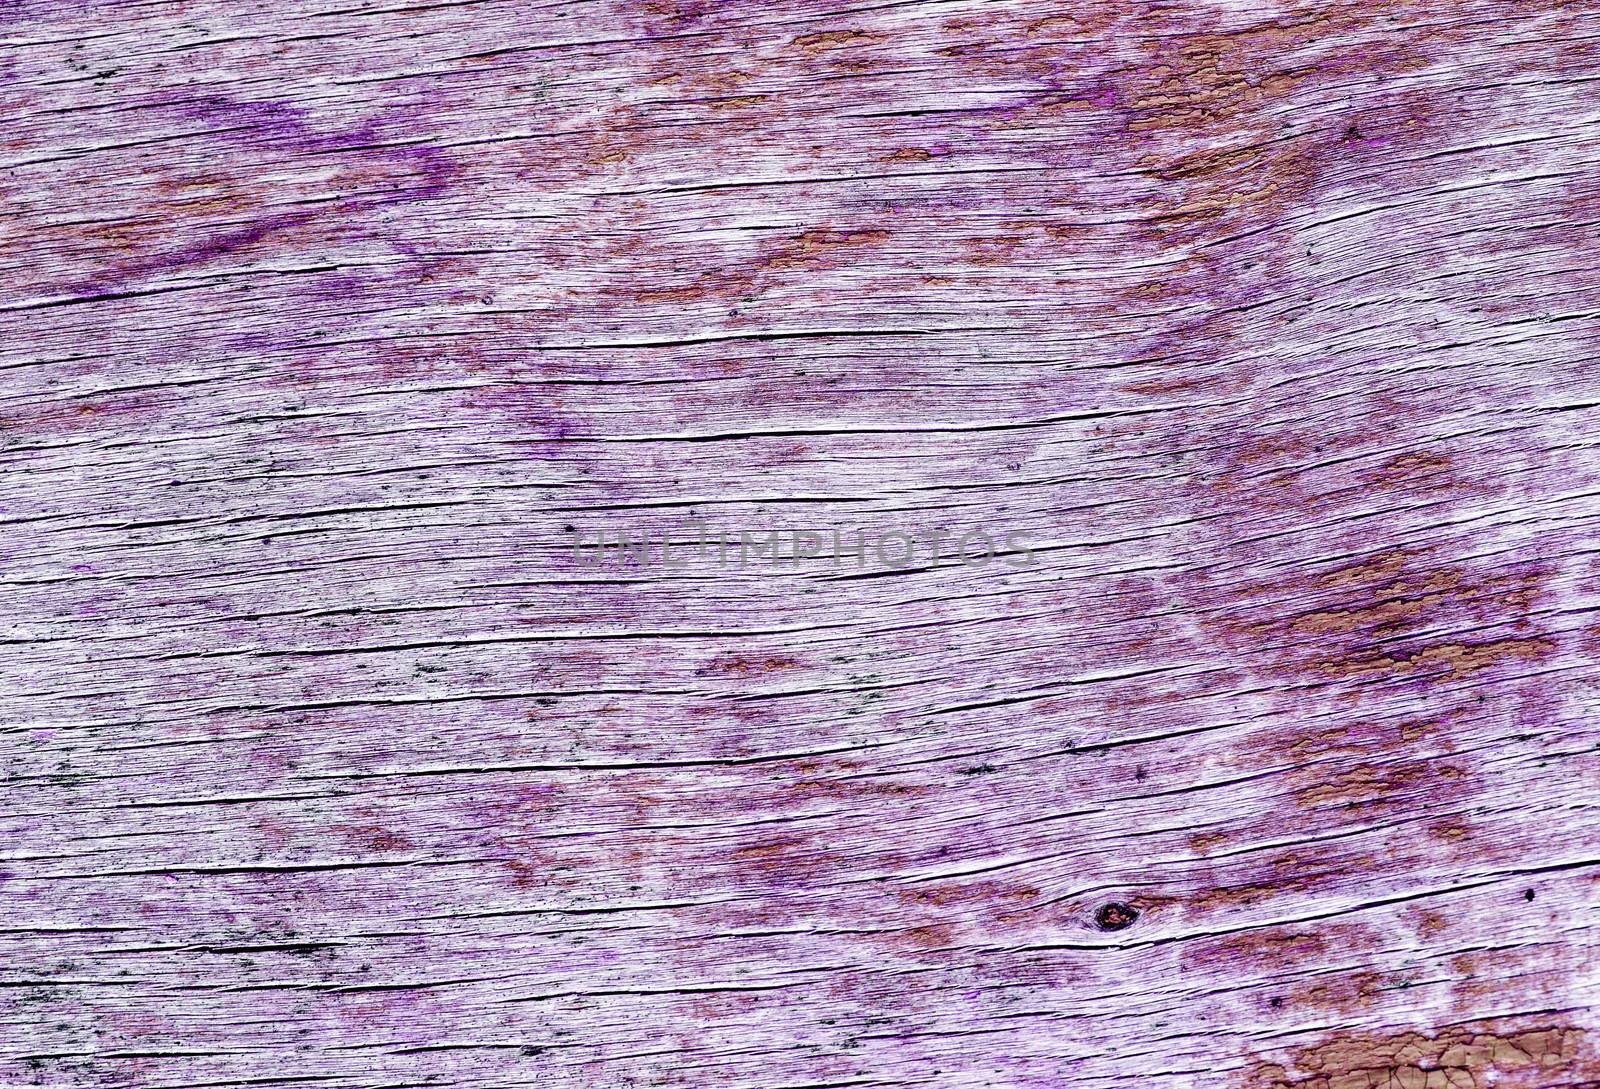 Vintage Grunge Texture Wood Background Painted In Pink